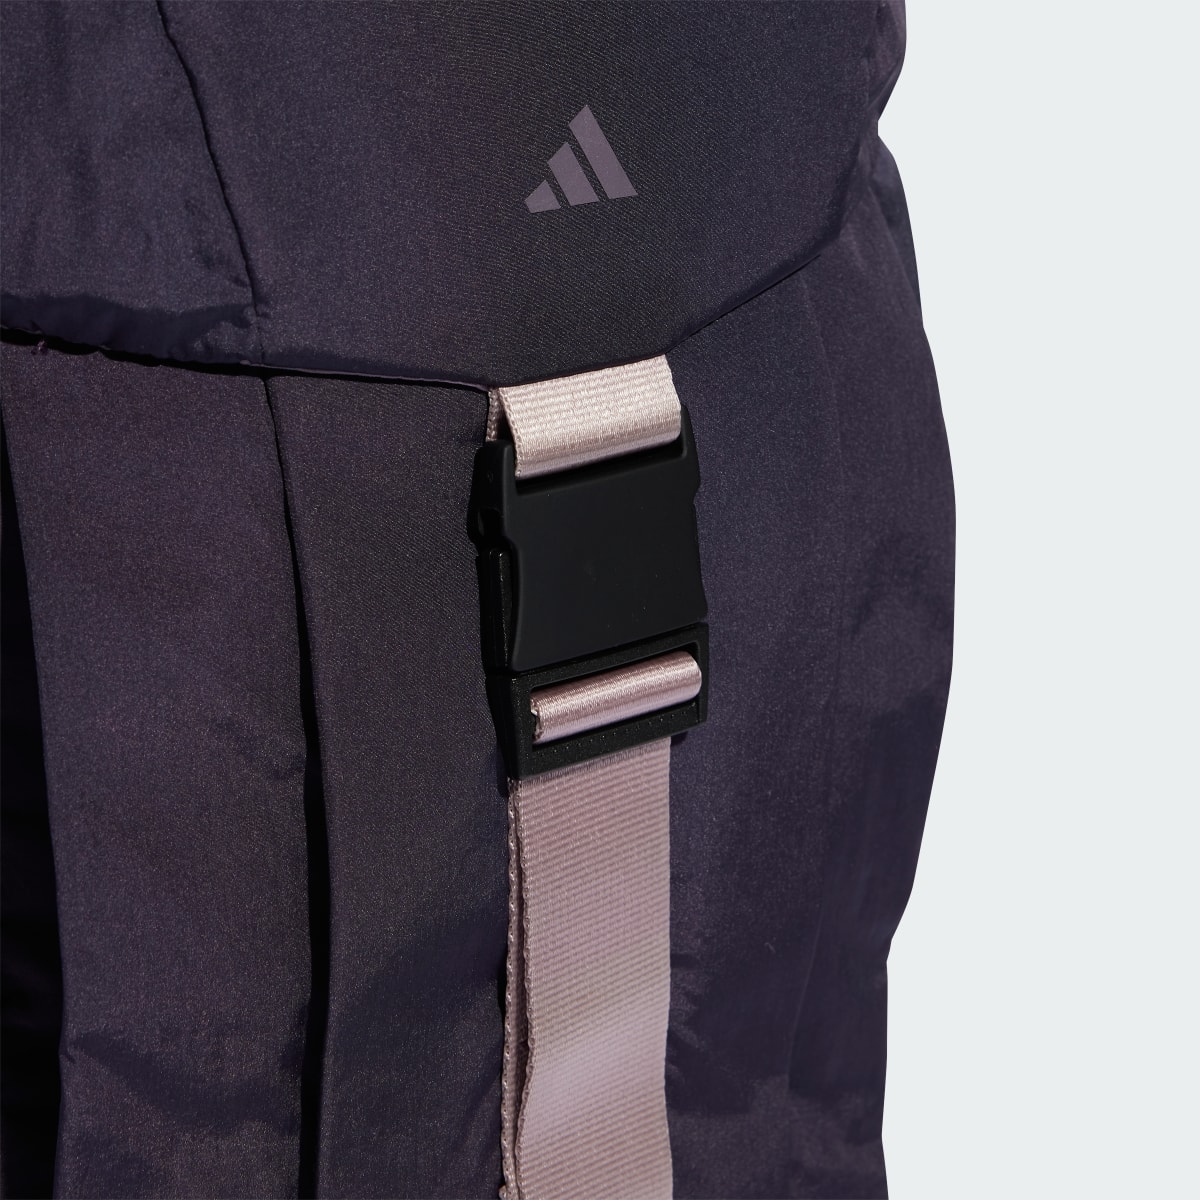 Adidas Gym HIIT Backpack. 7